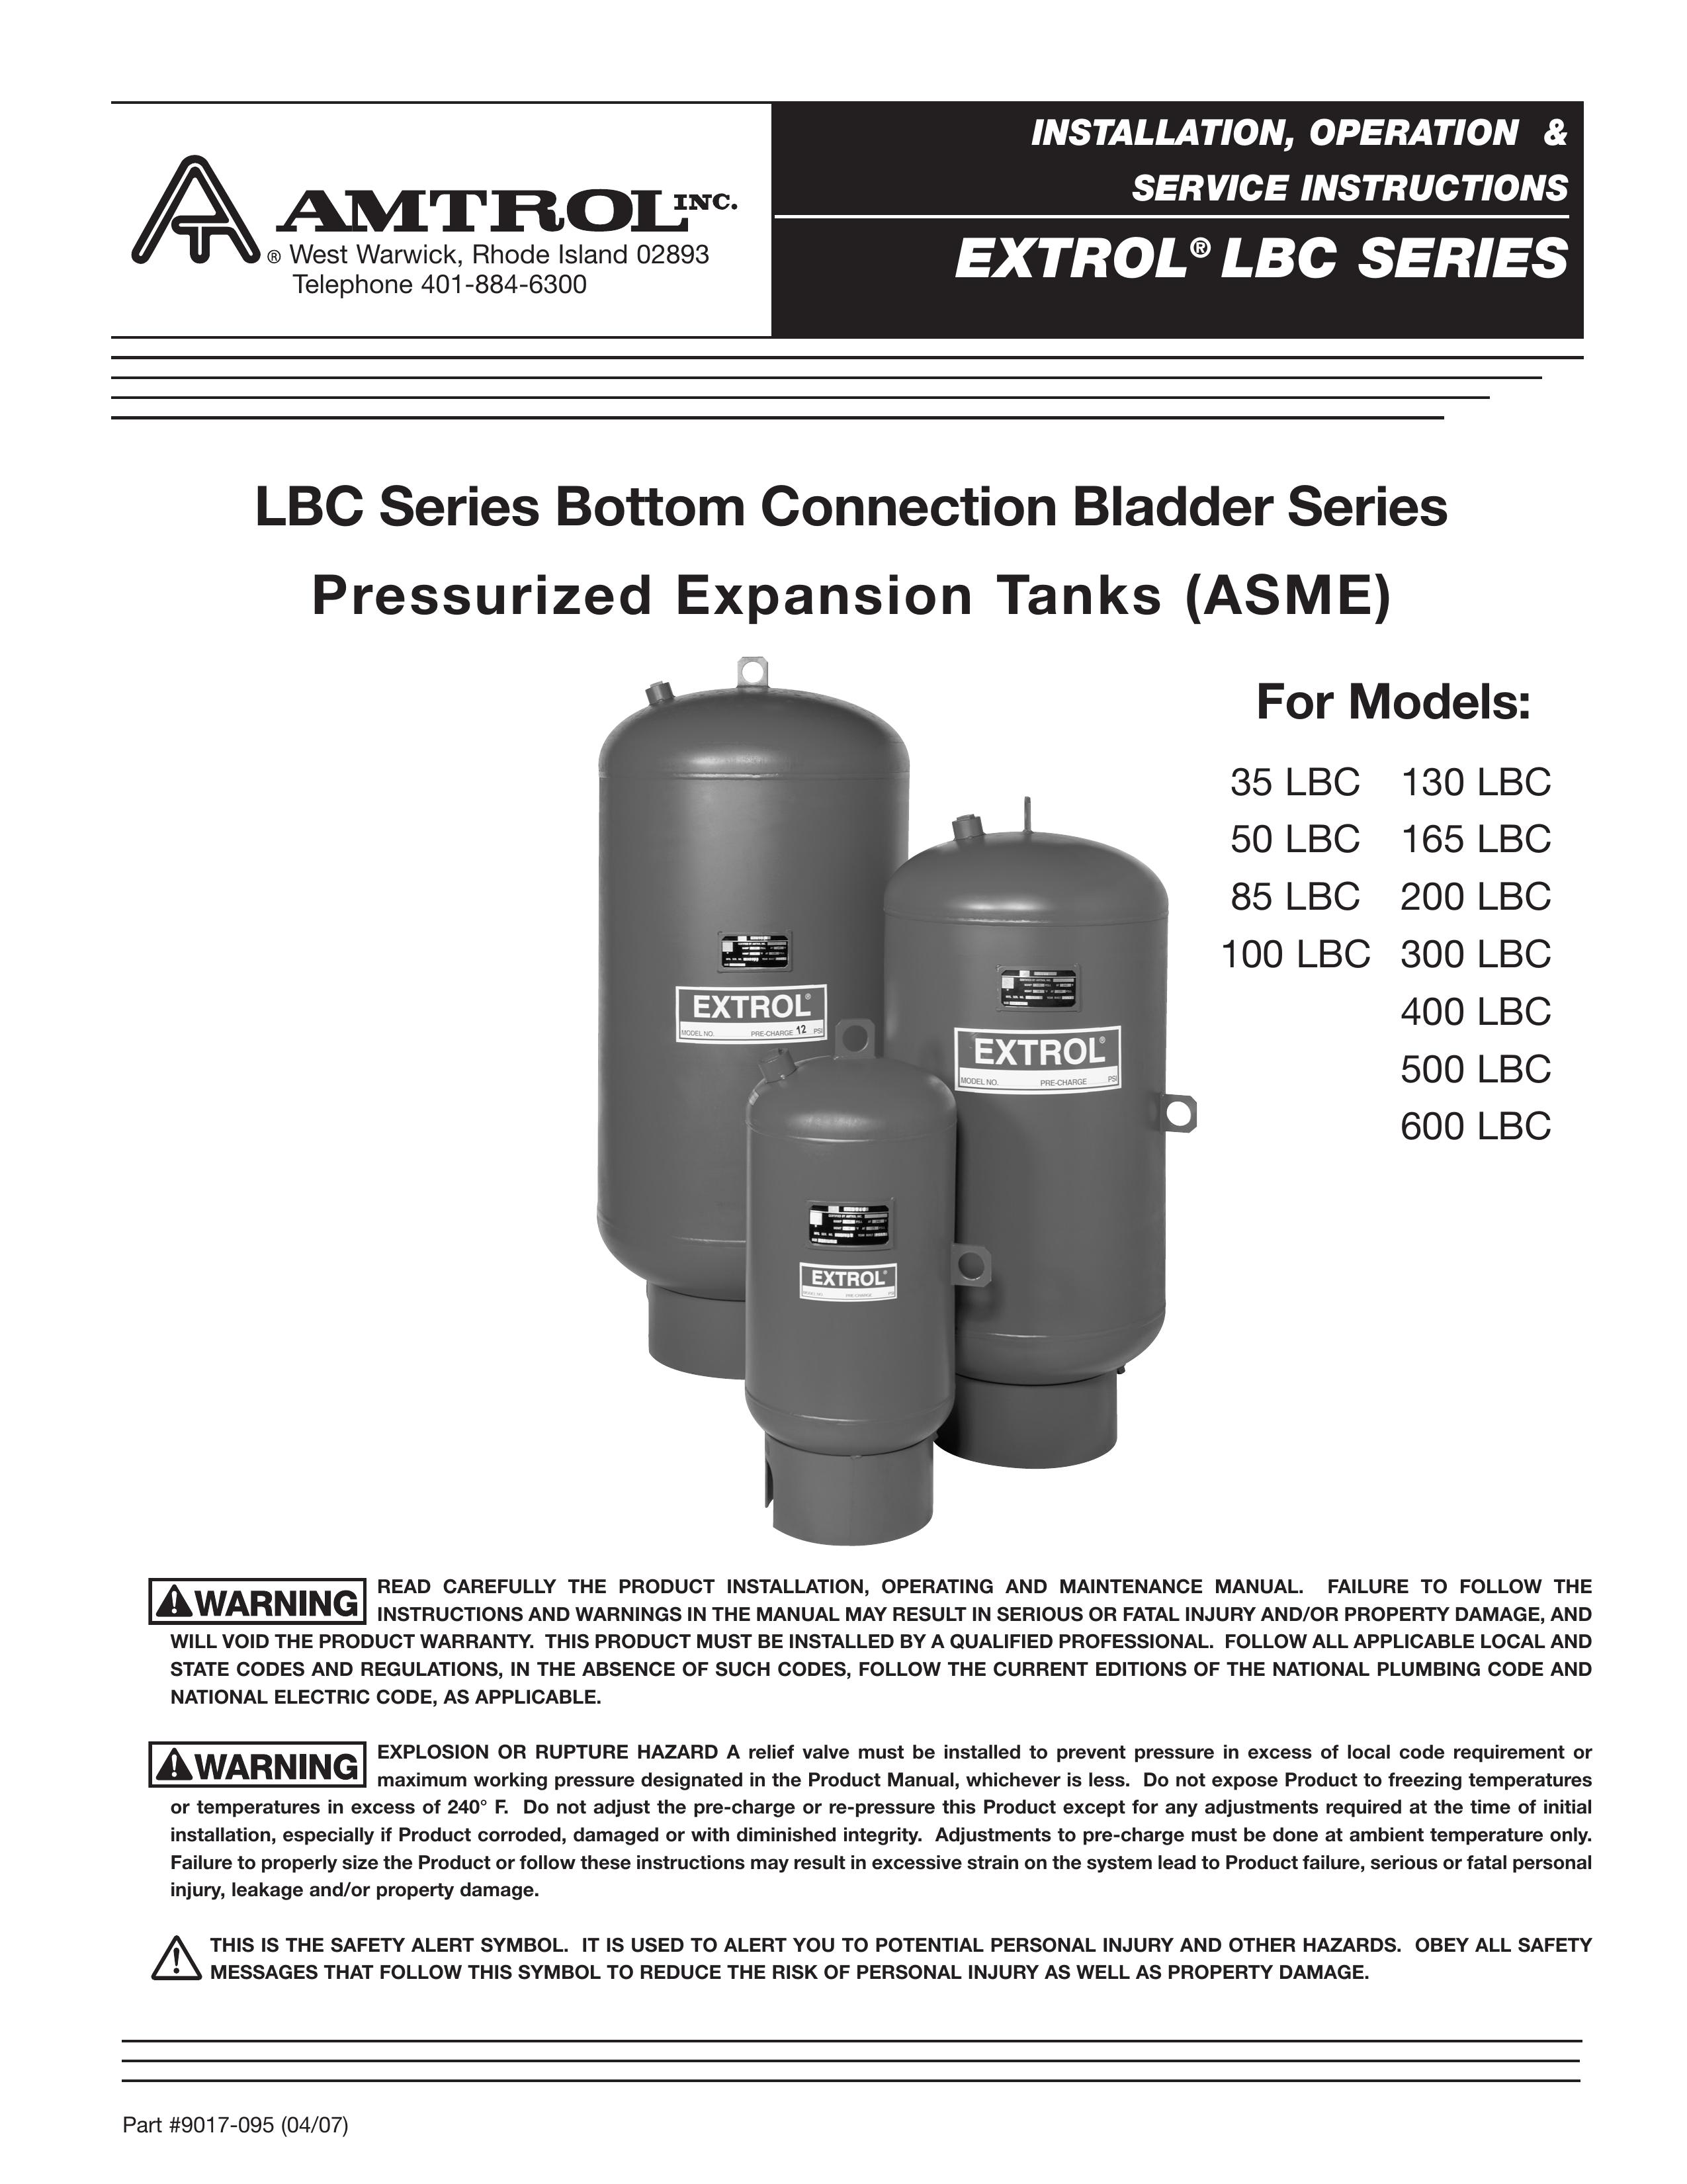 Amtrol 50 LBC Oxygen Equipment User Manual